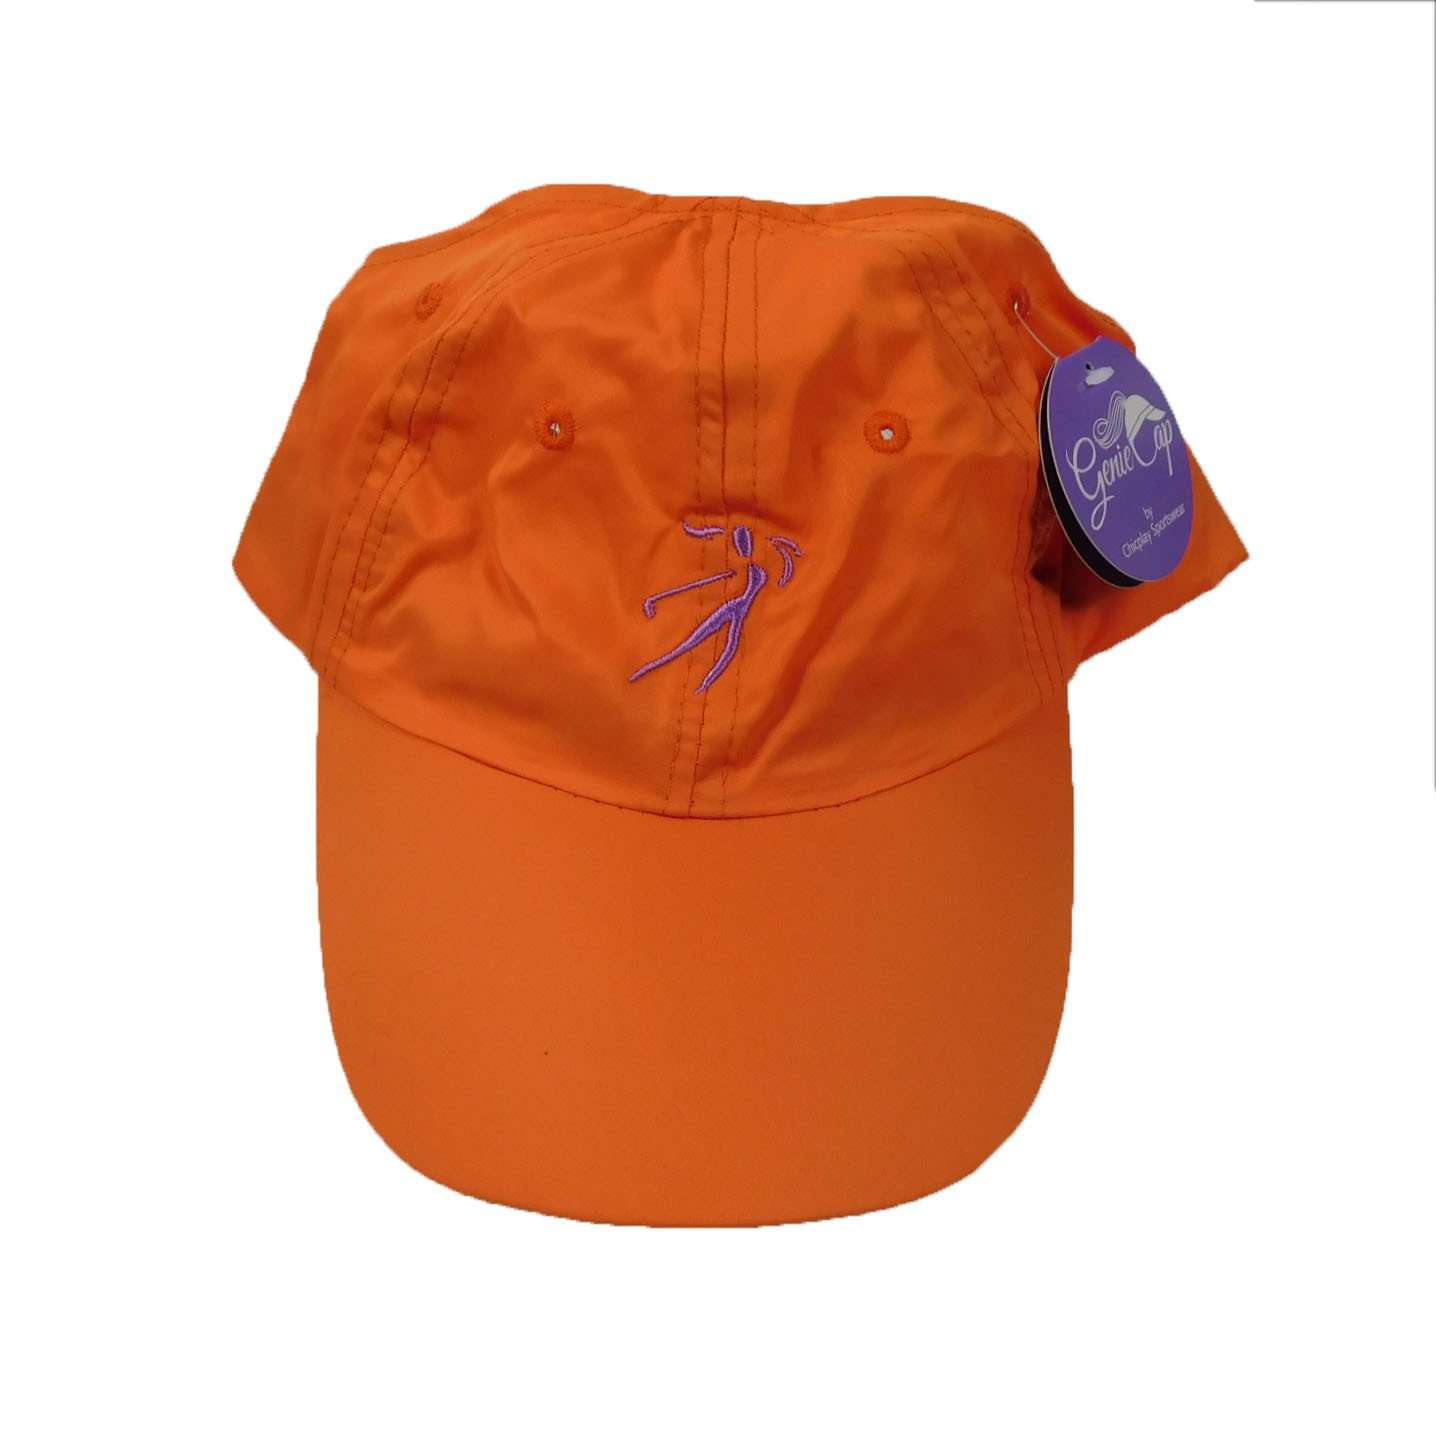 Ginnie Cap in Microfiber with Golf Logo Cap Great hats by Karen Keith WSMF603OR Orange  